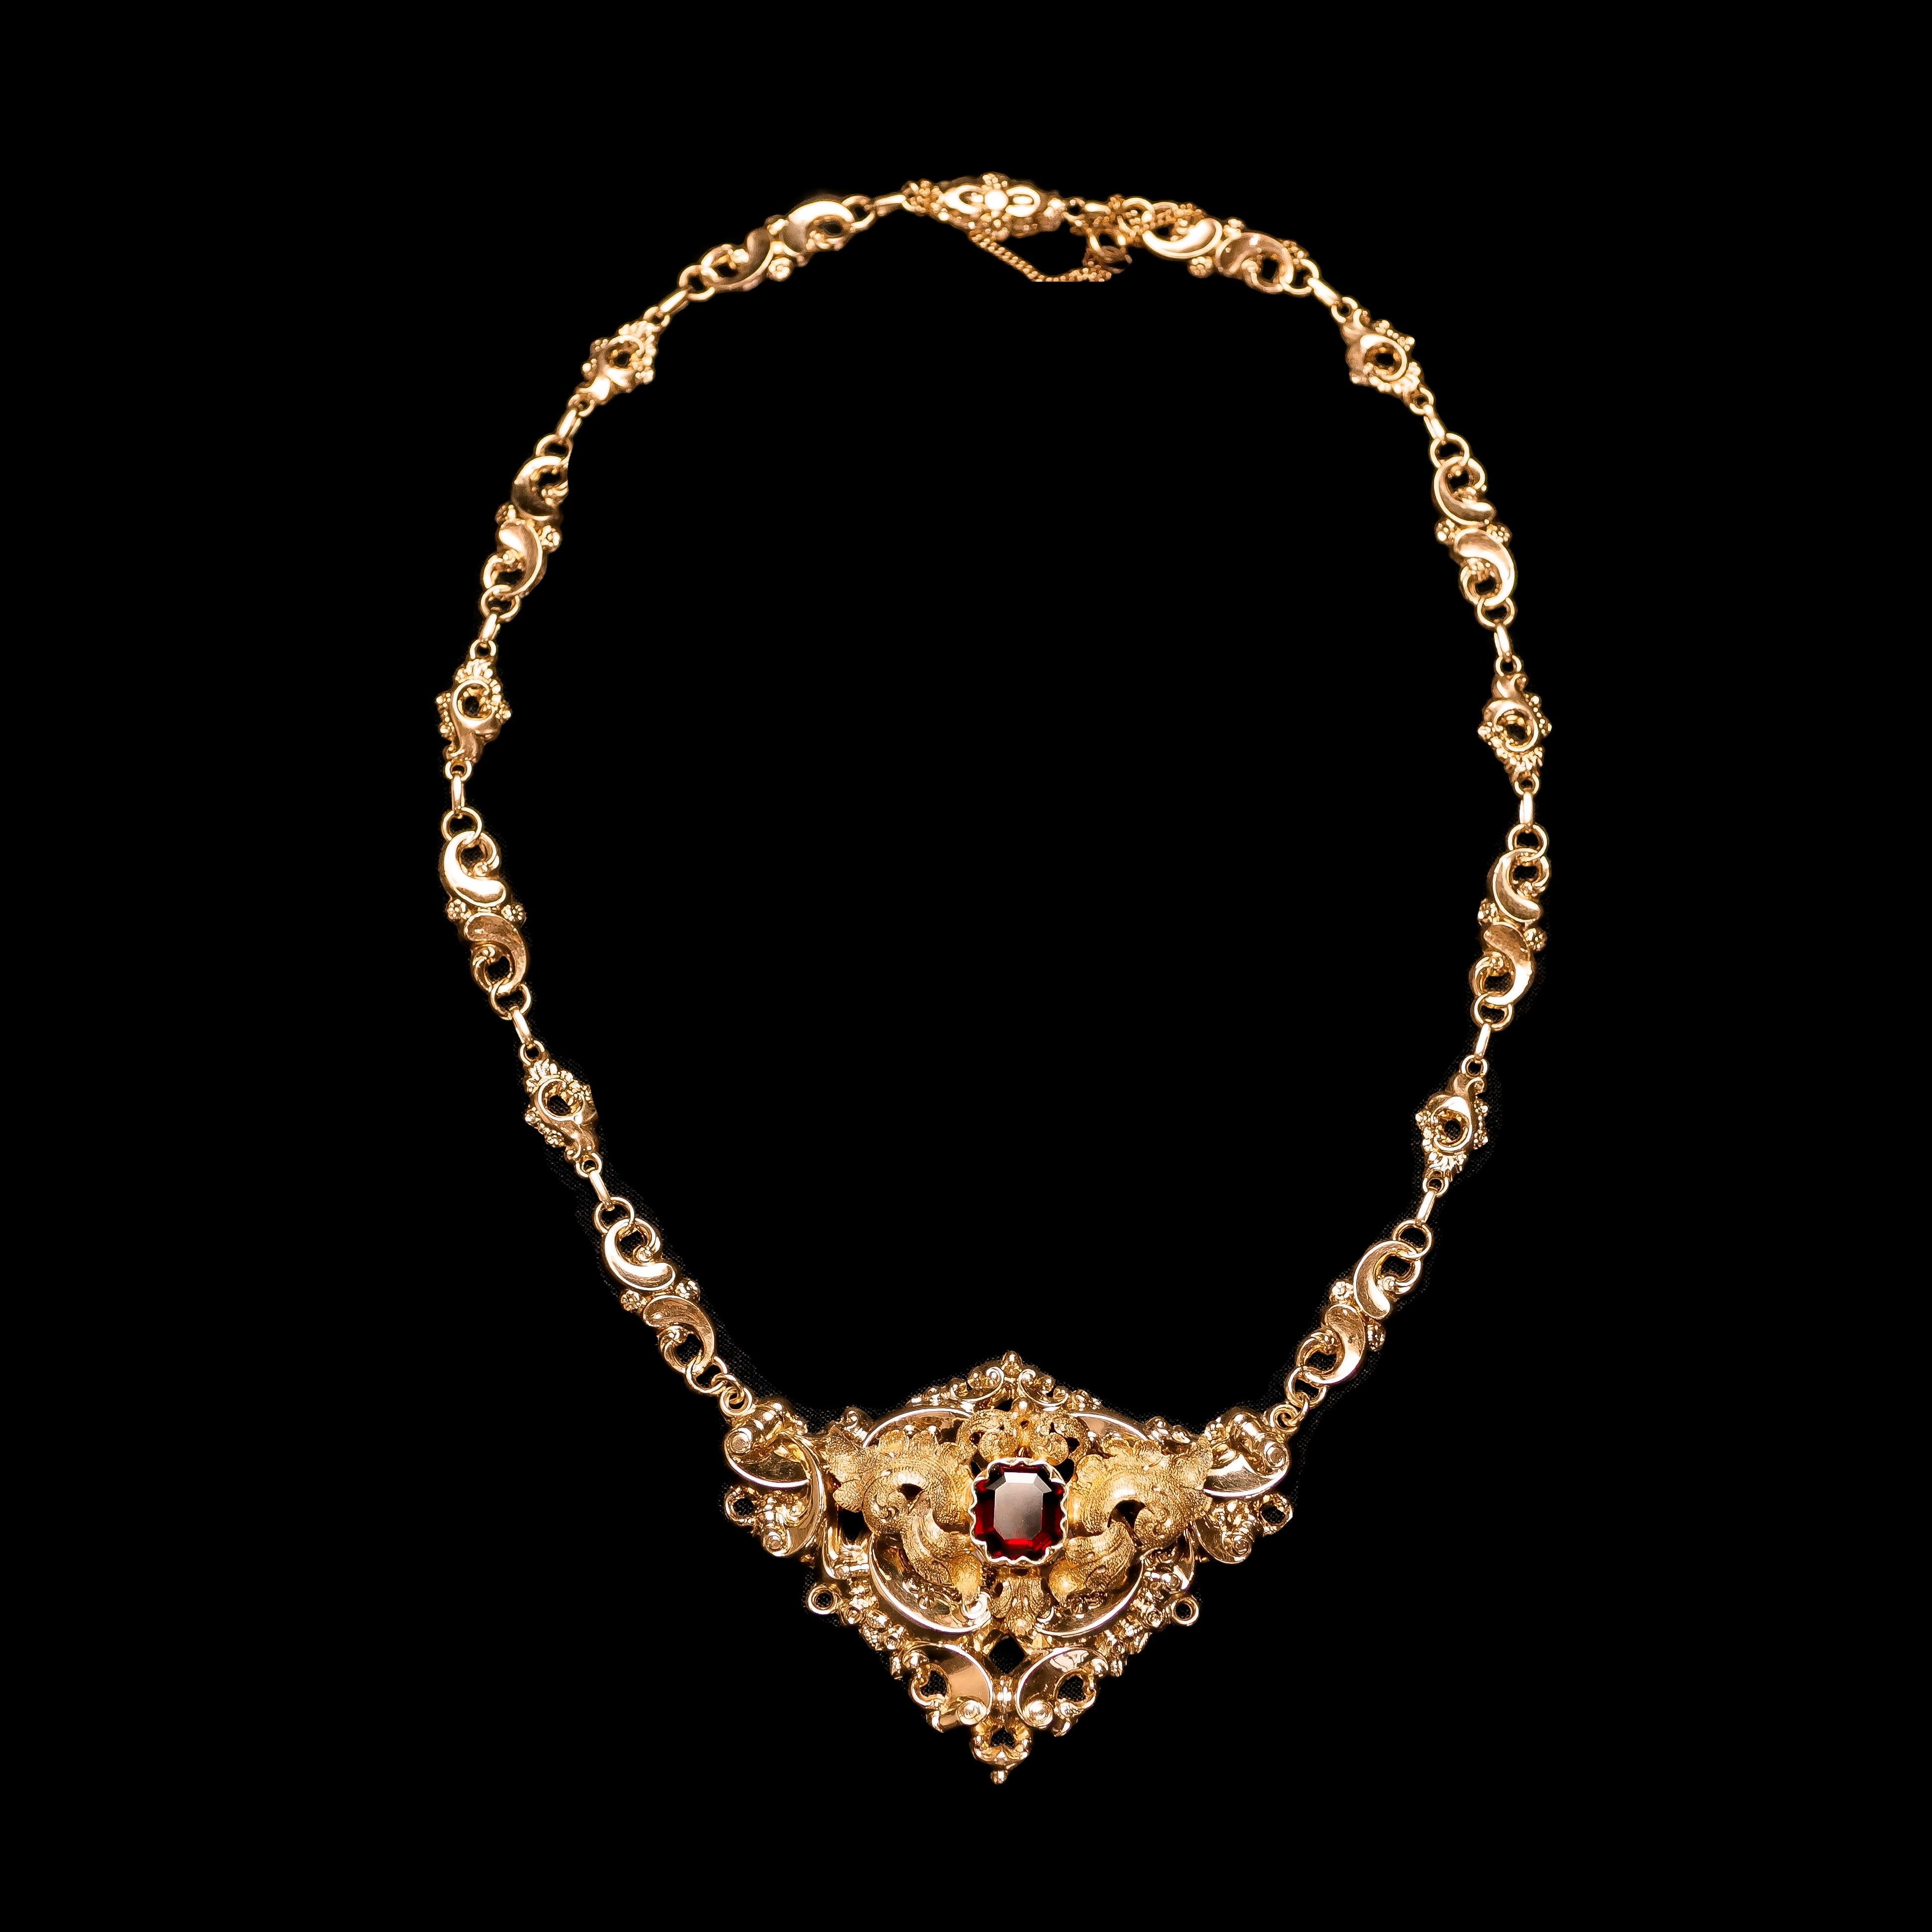 Emerald Cut Antique Victorian 18K Gold Garnet Necklace in Baroque Revival Style, c.1840